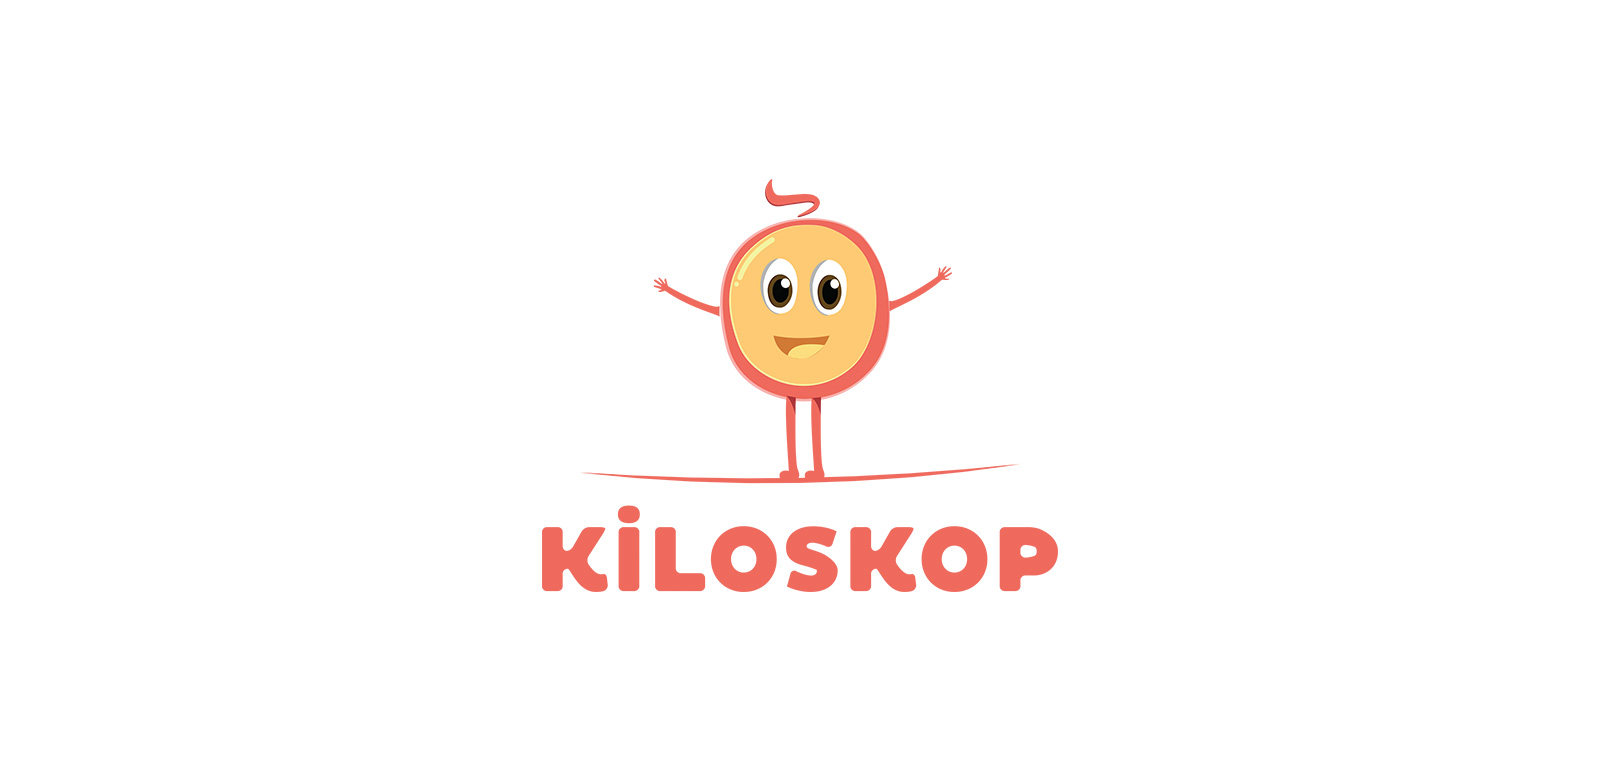 Kiloskop Logo, Corporate Identity 1